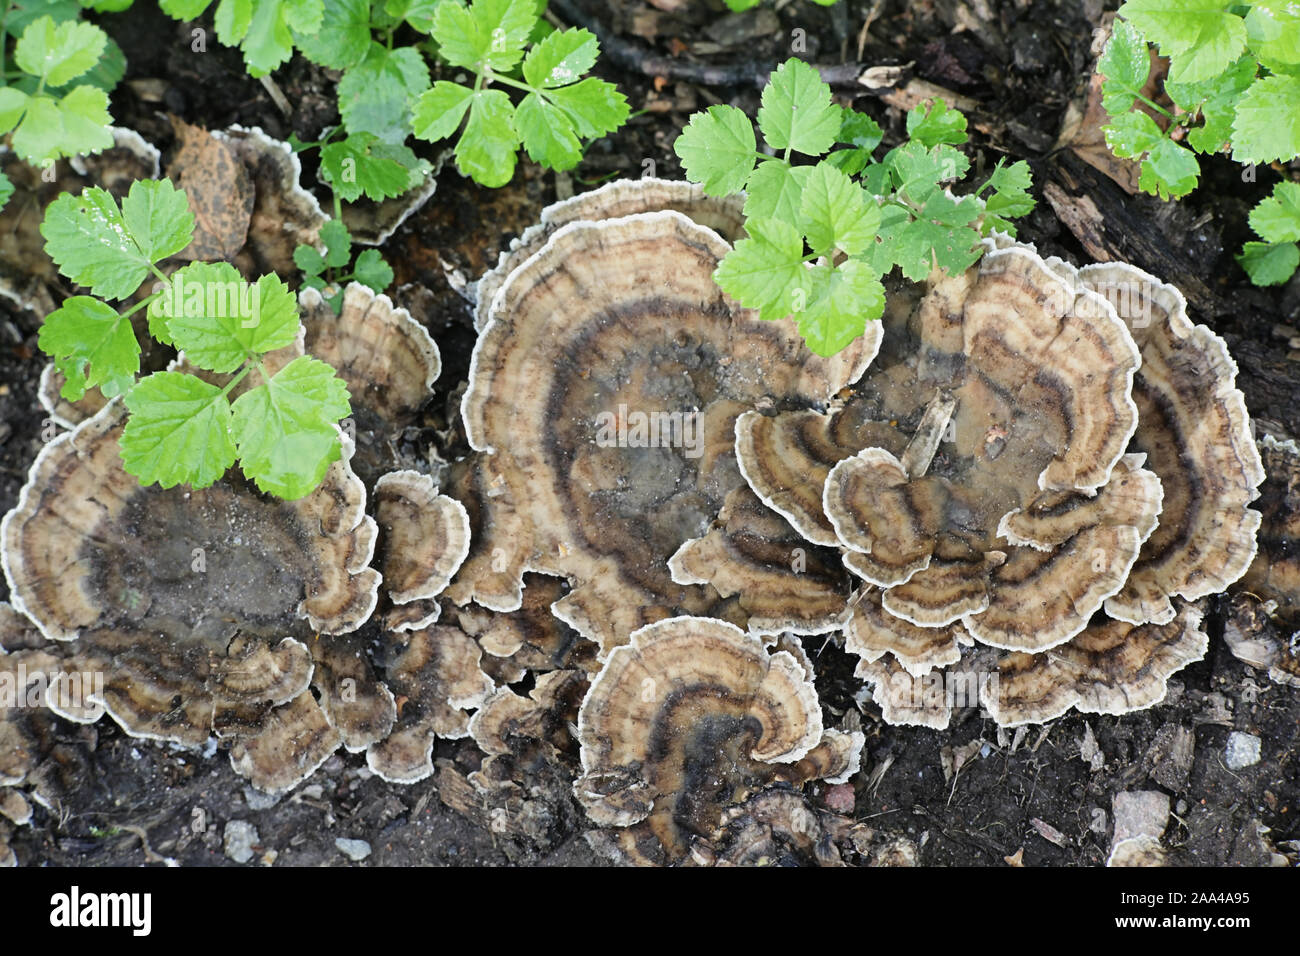 Bjerkandera adusta, known as the smoky polypore or smoky bracket, wild fungus from Finland Stock Photo